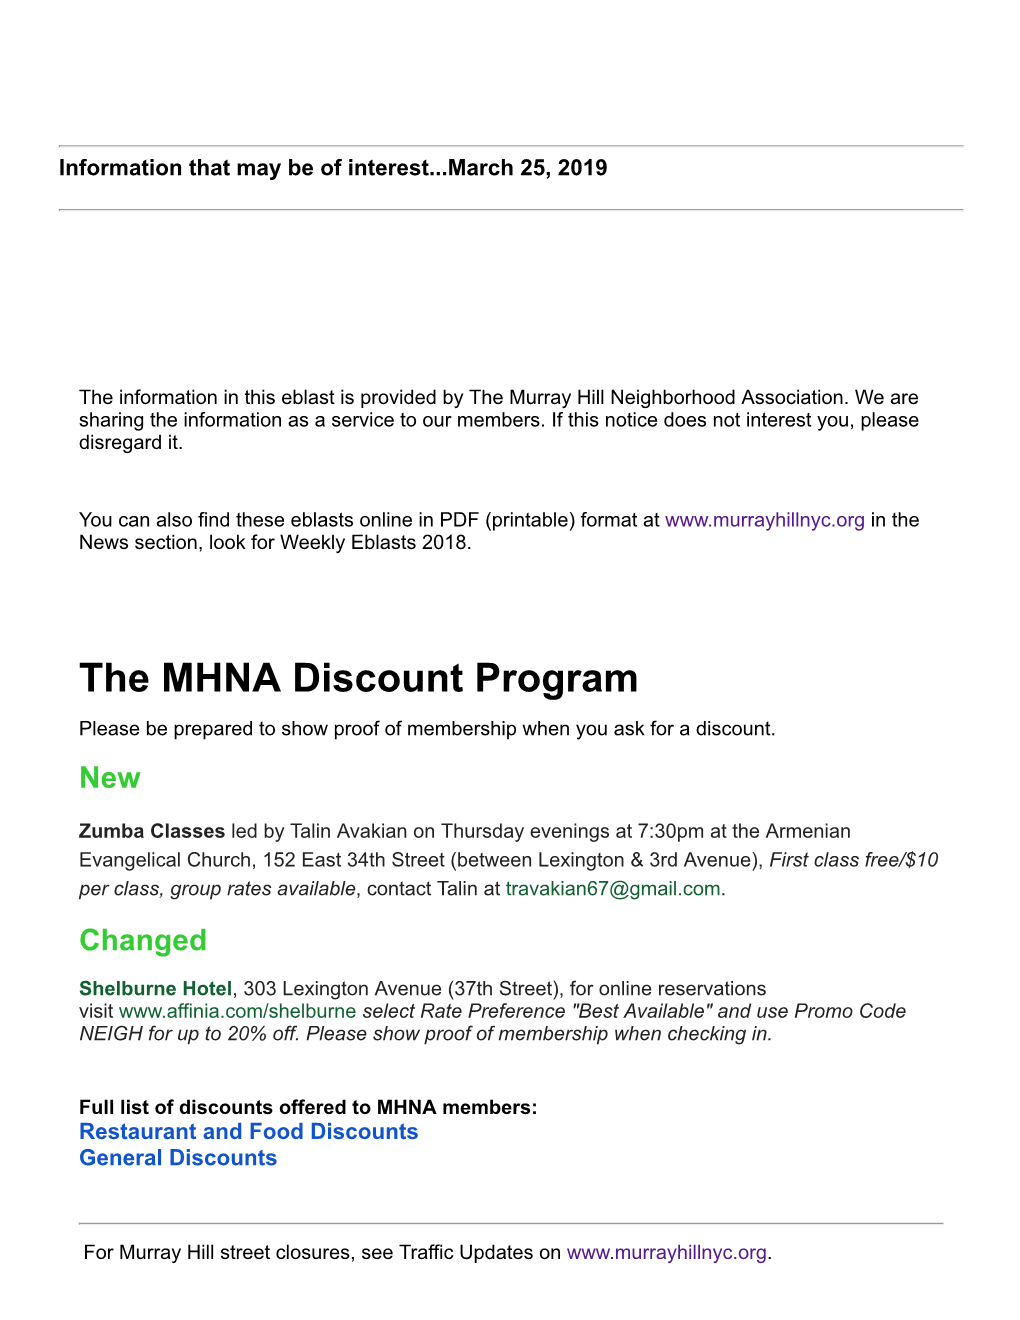 The MHNA Discount Program